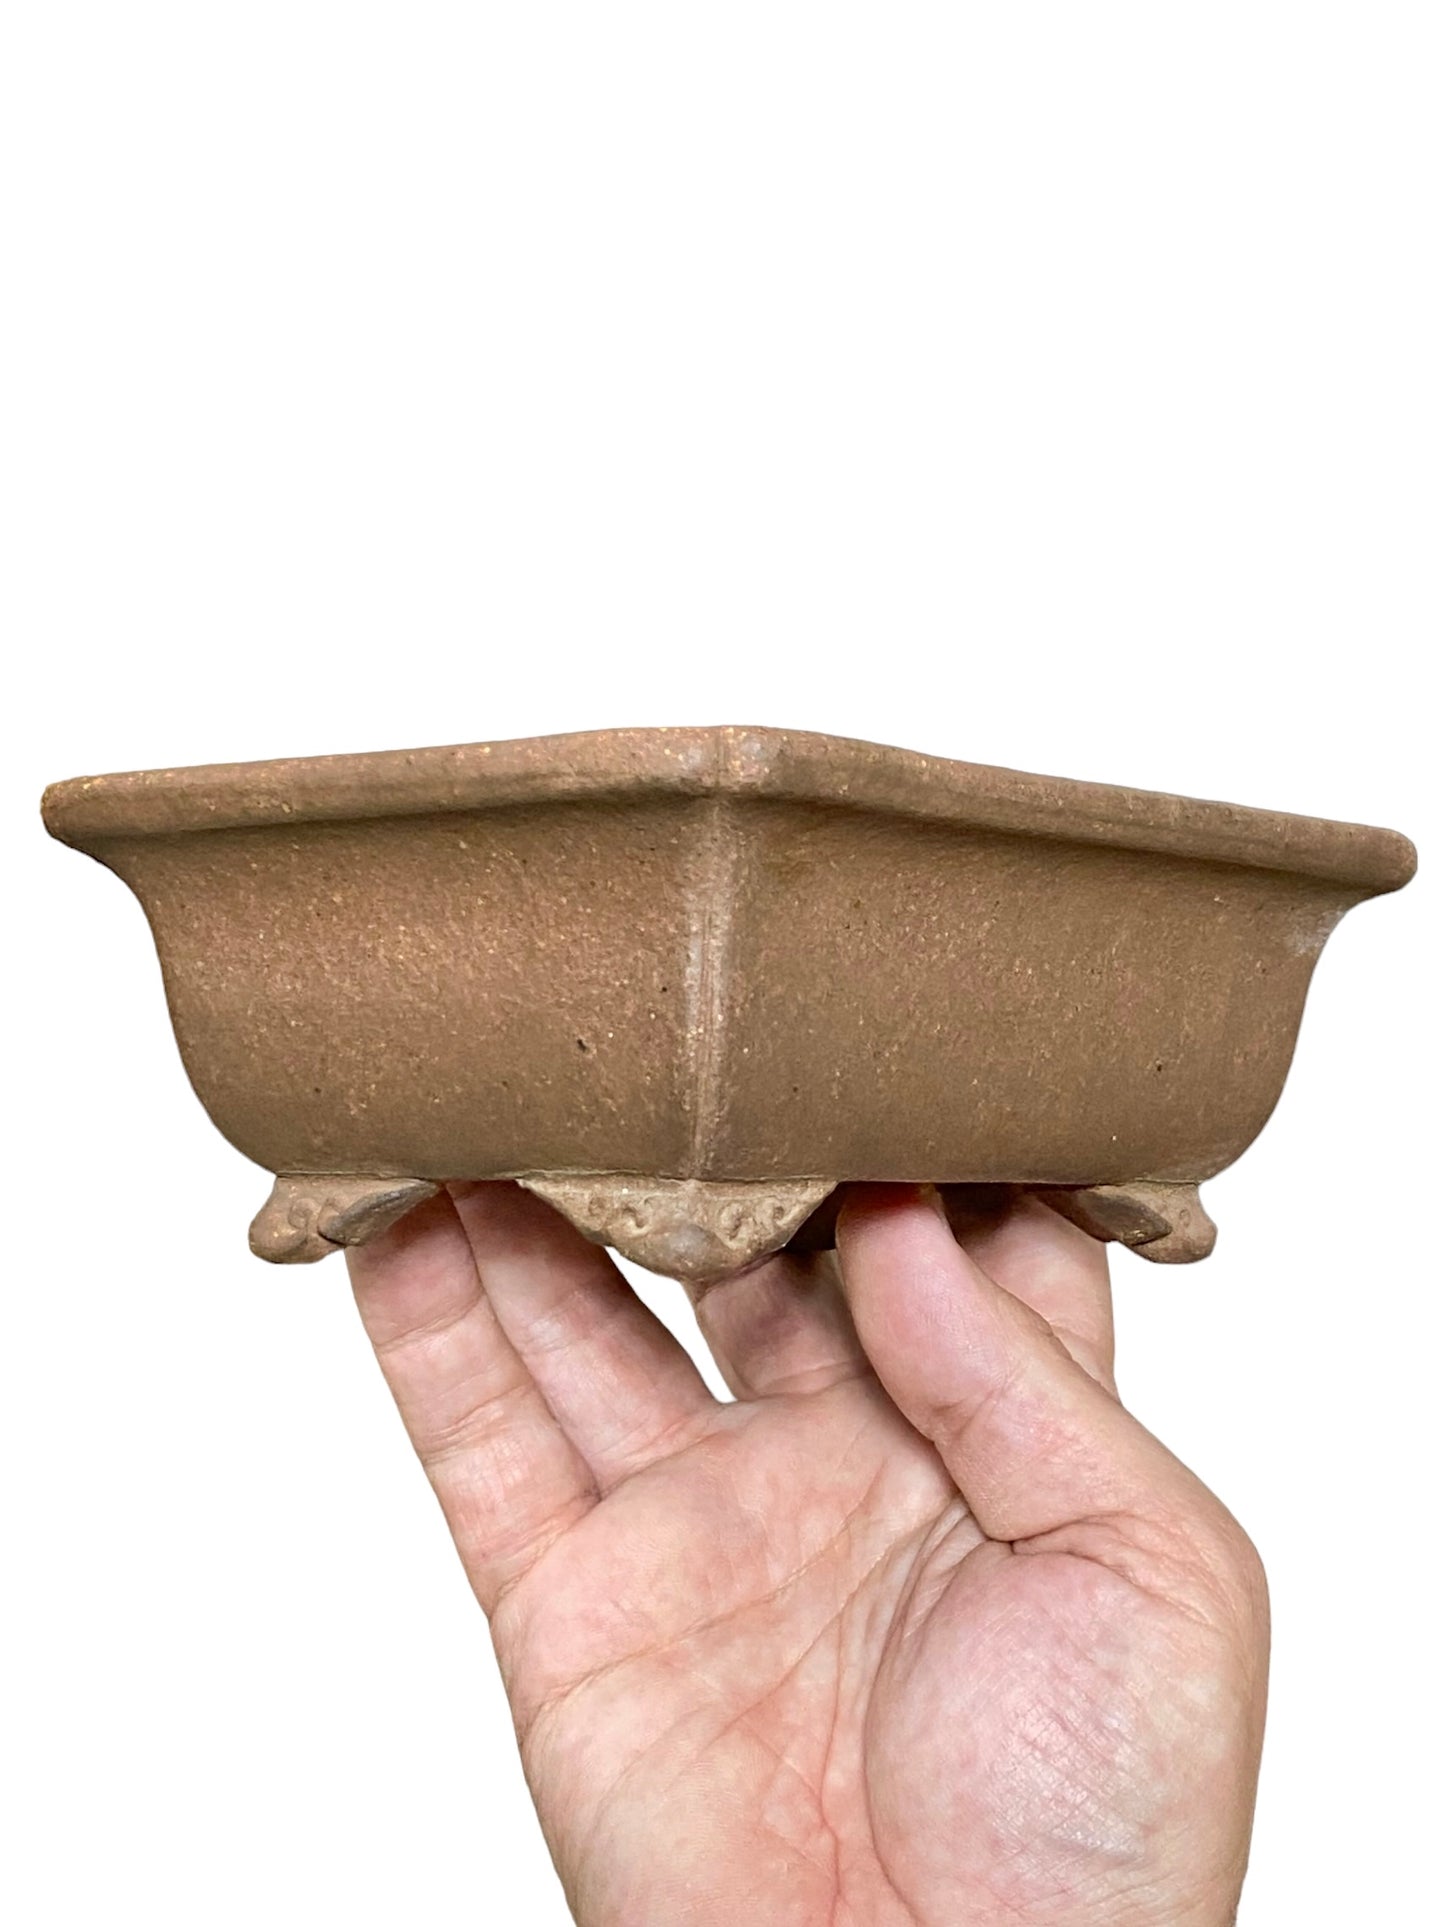 Yamaaki - Rare 1st Generation Unglazed Footed Rectangle Bonsai Pot